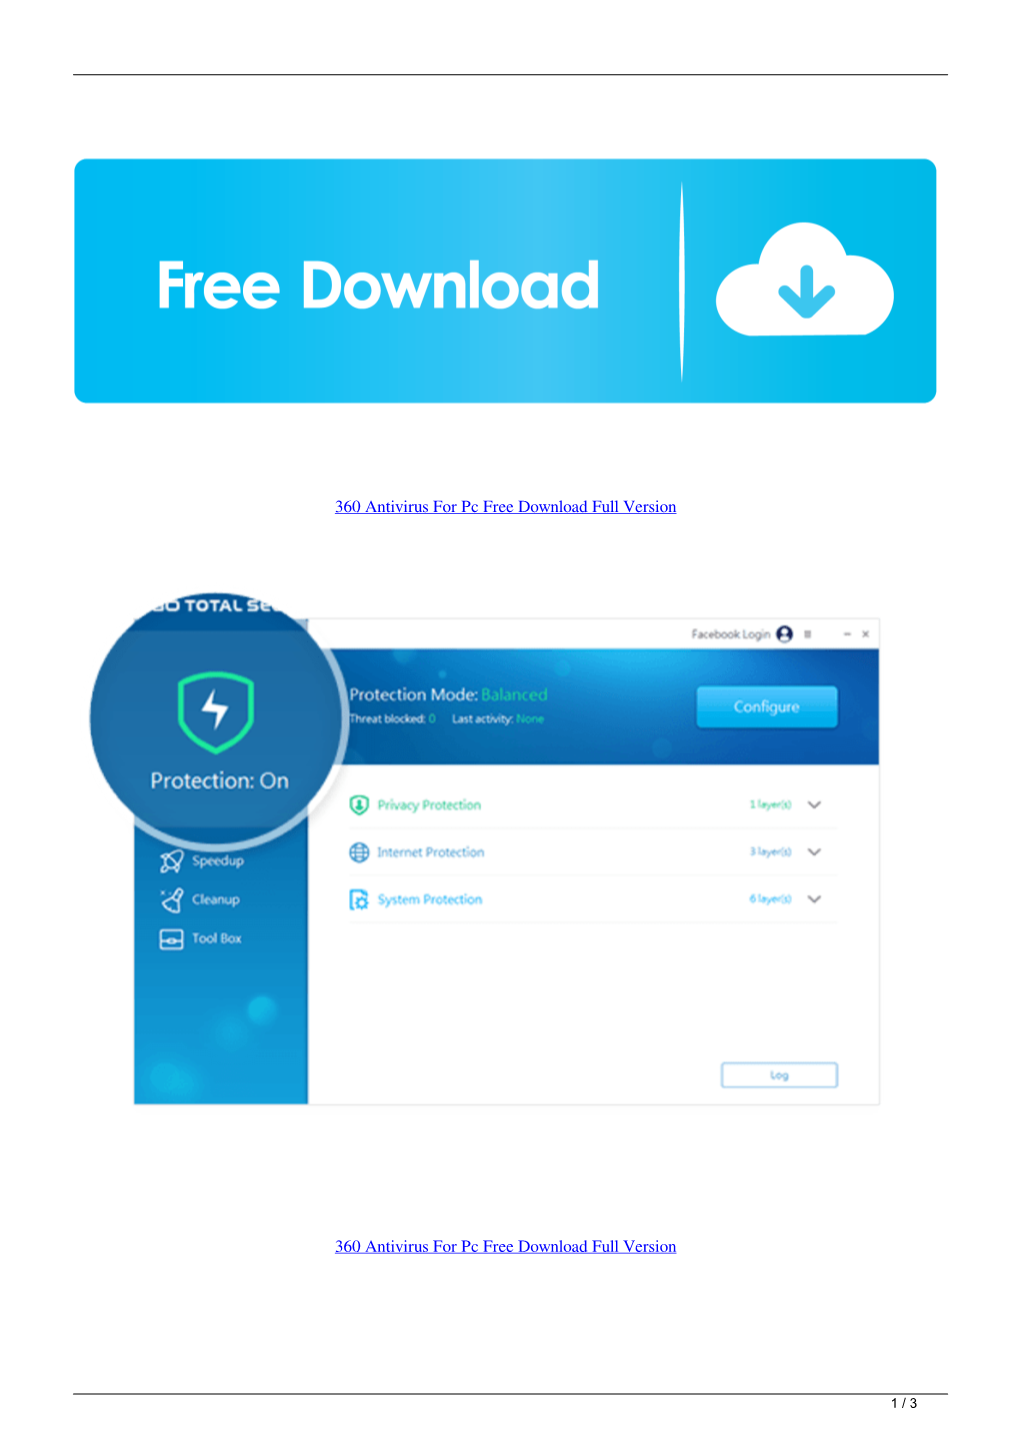 360 Antivirus for Pc Free Download Full Version